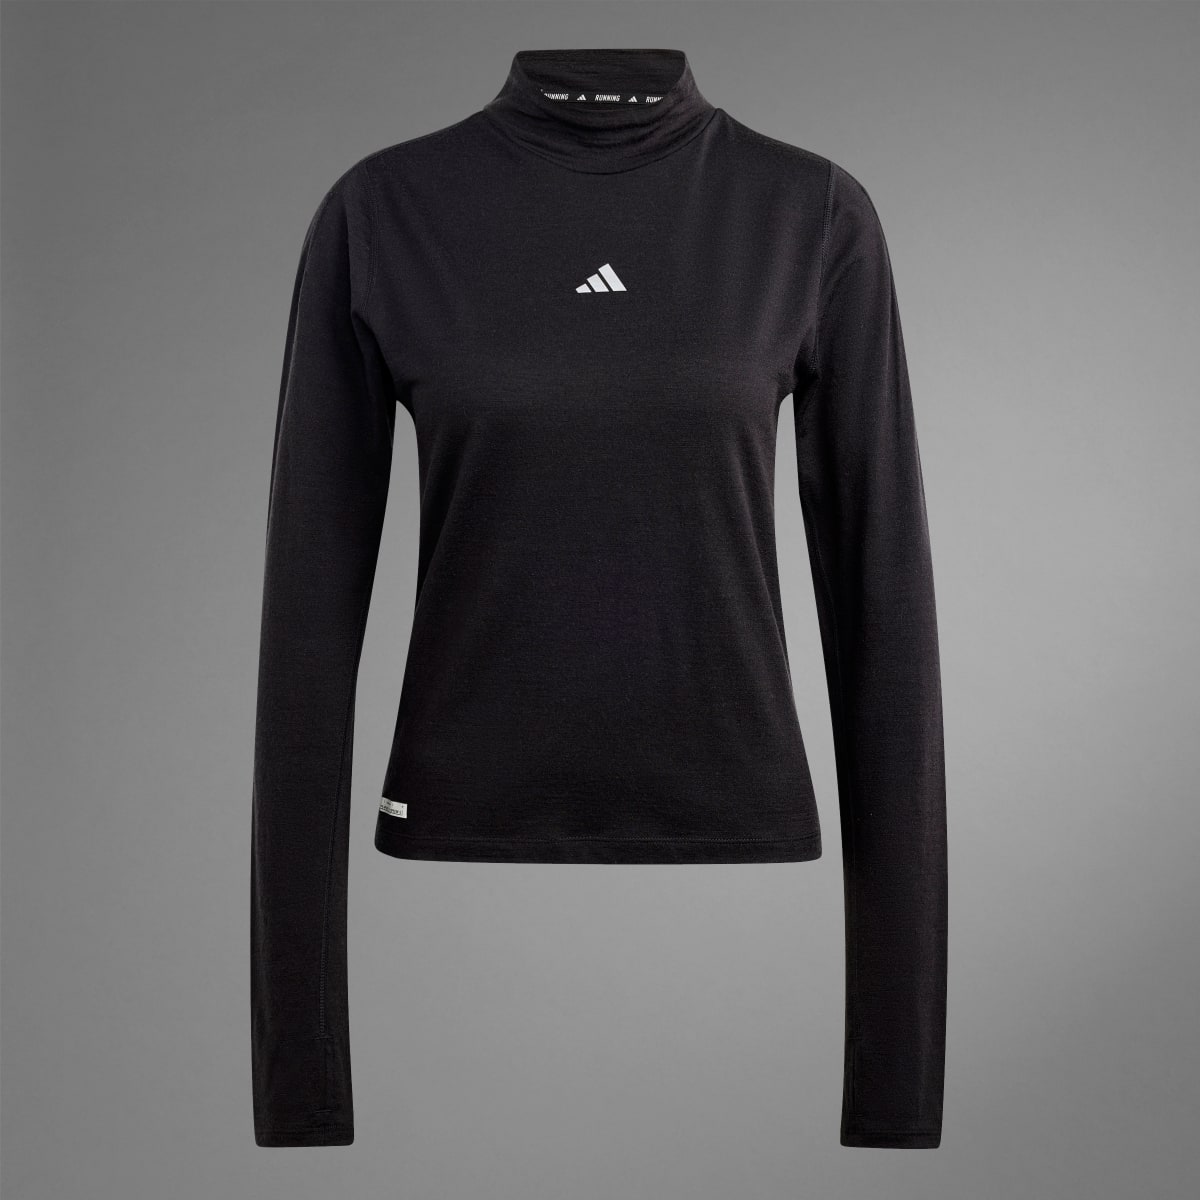 Adidas Koszulka Ultimate Running Conquer the Elements Merino Long Sleeve. 9